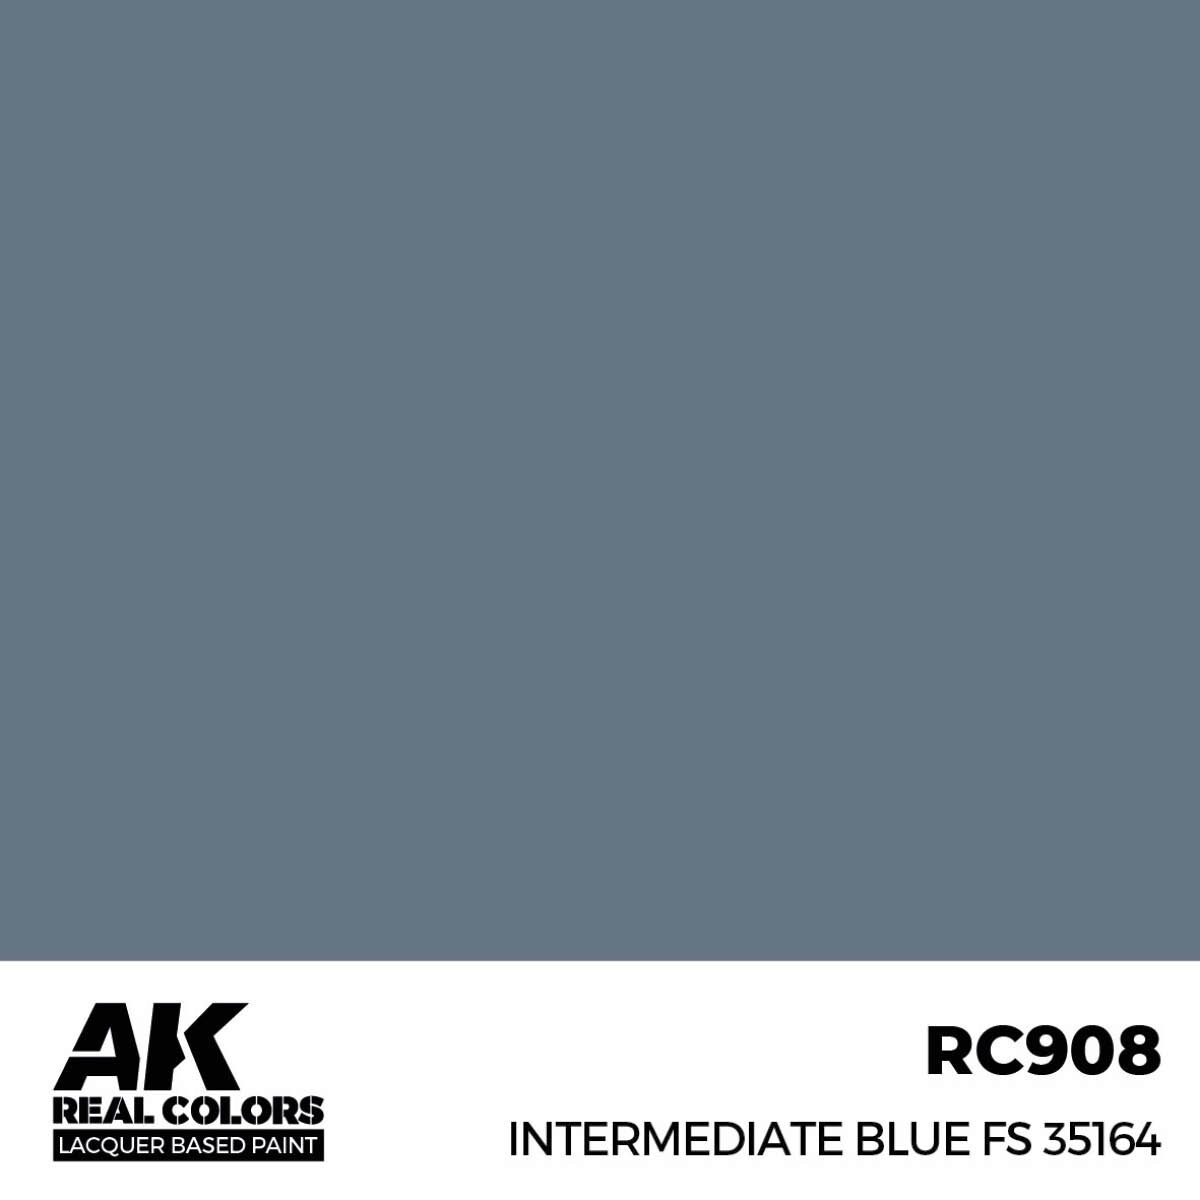 AK RC908 Real Colors Intermediate Blue FS 35164 17 ml.